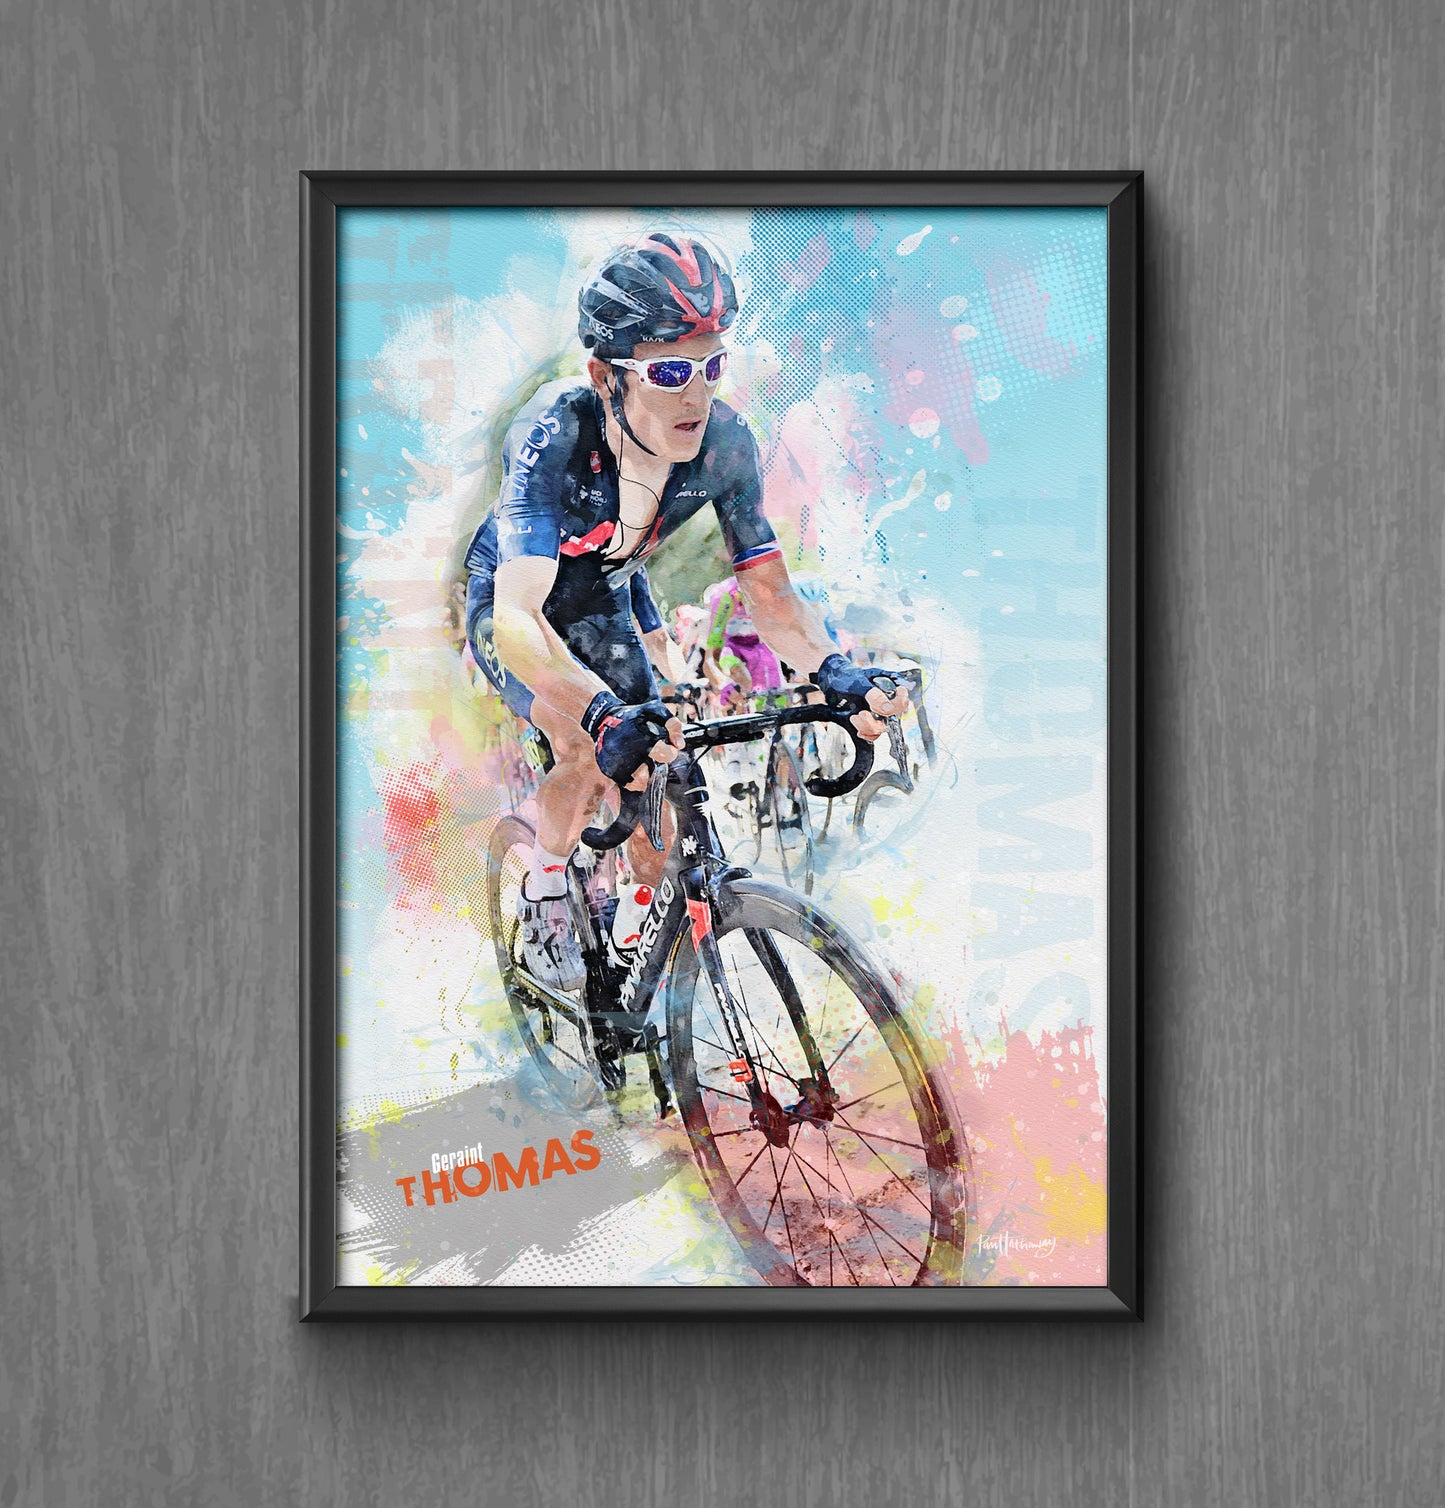 Geraint Thomas - Cycling Art Print - Option 3